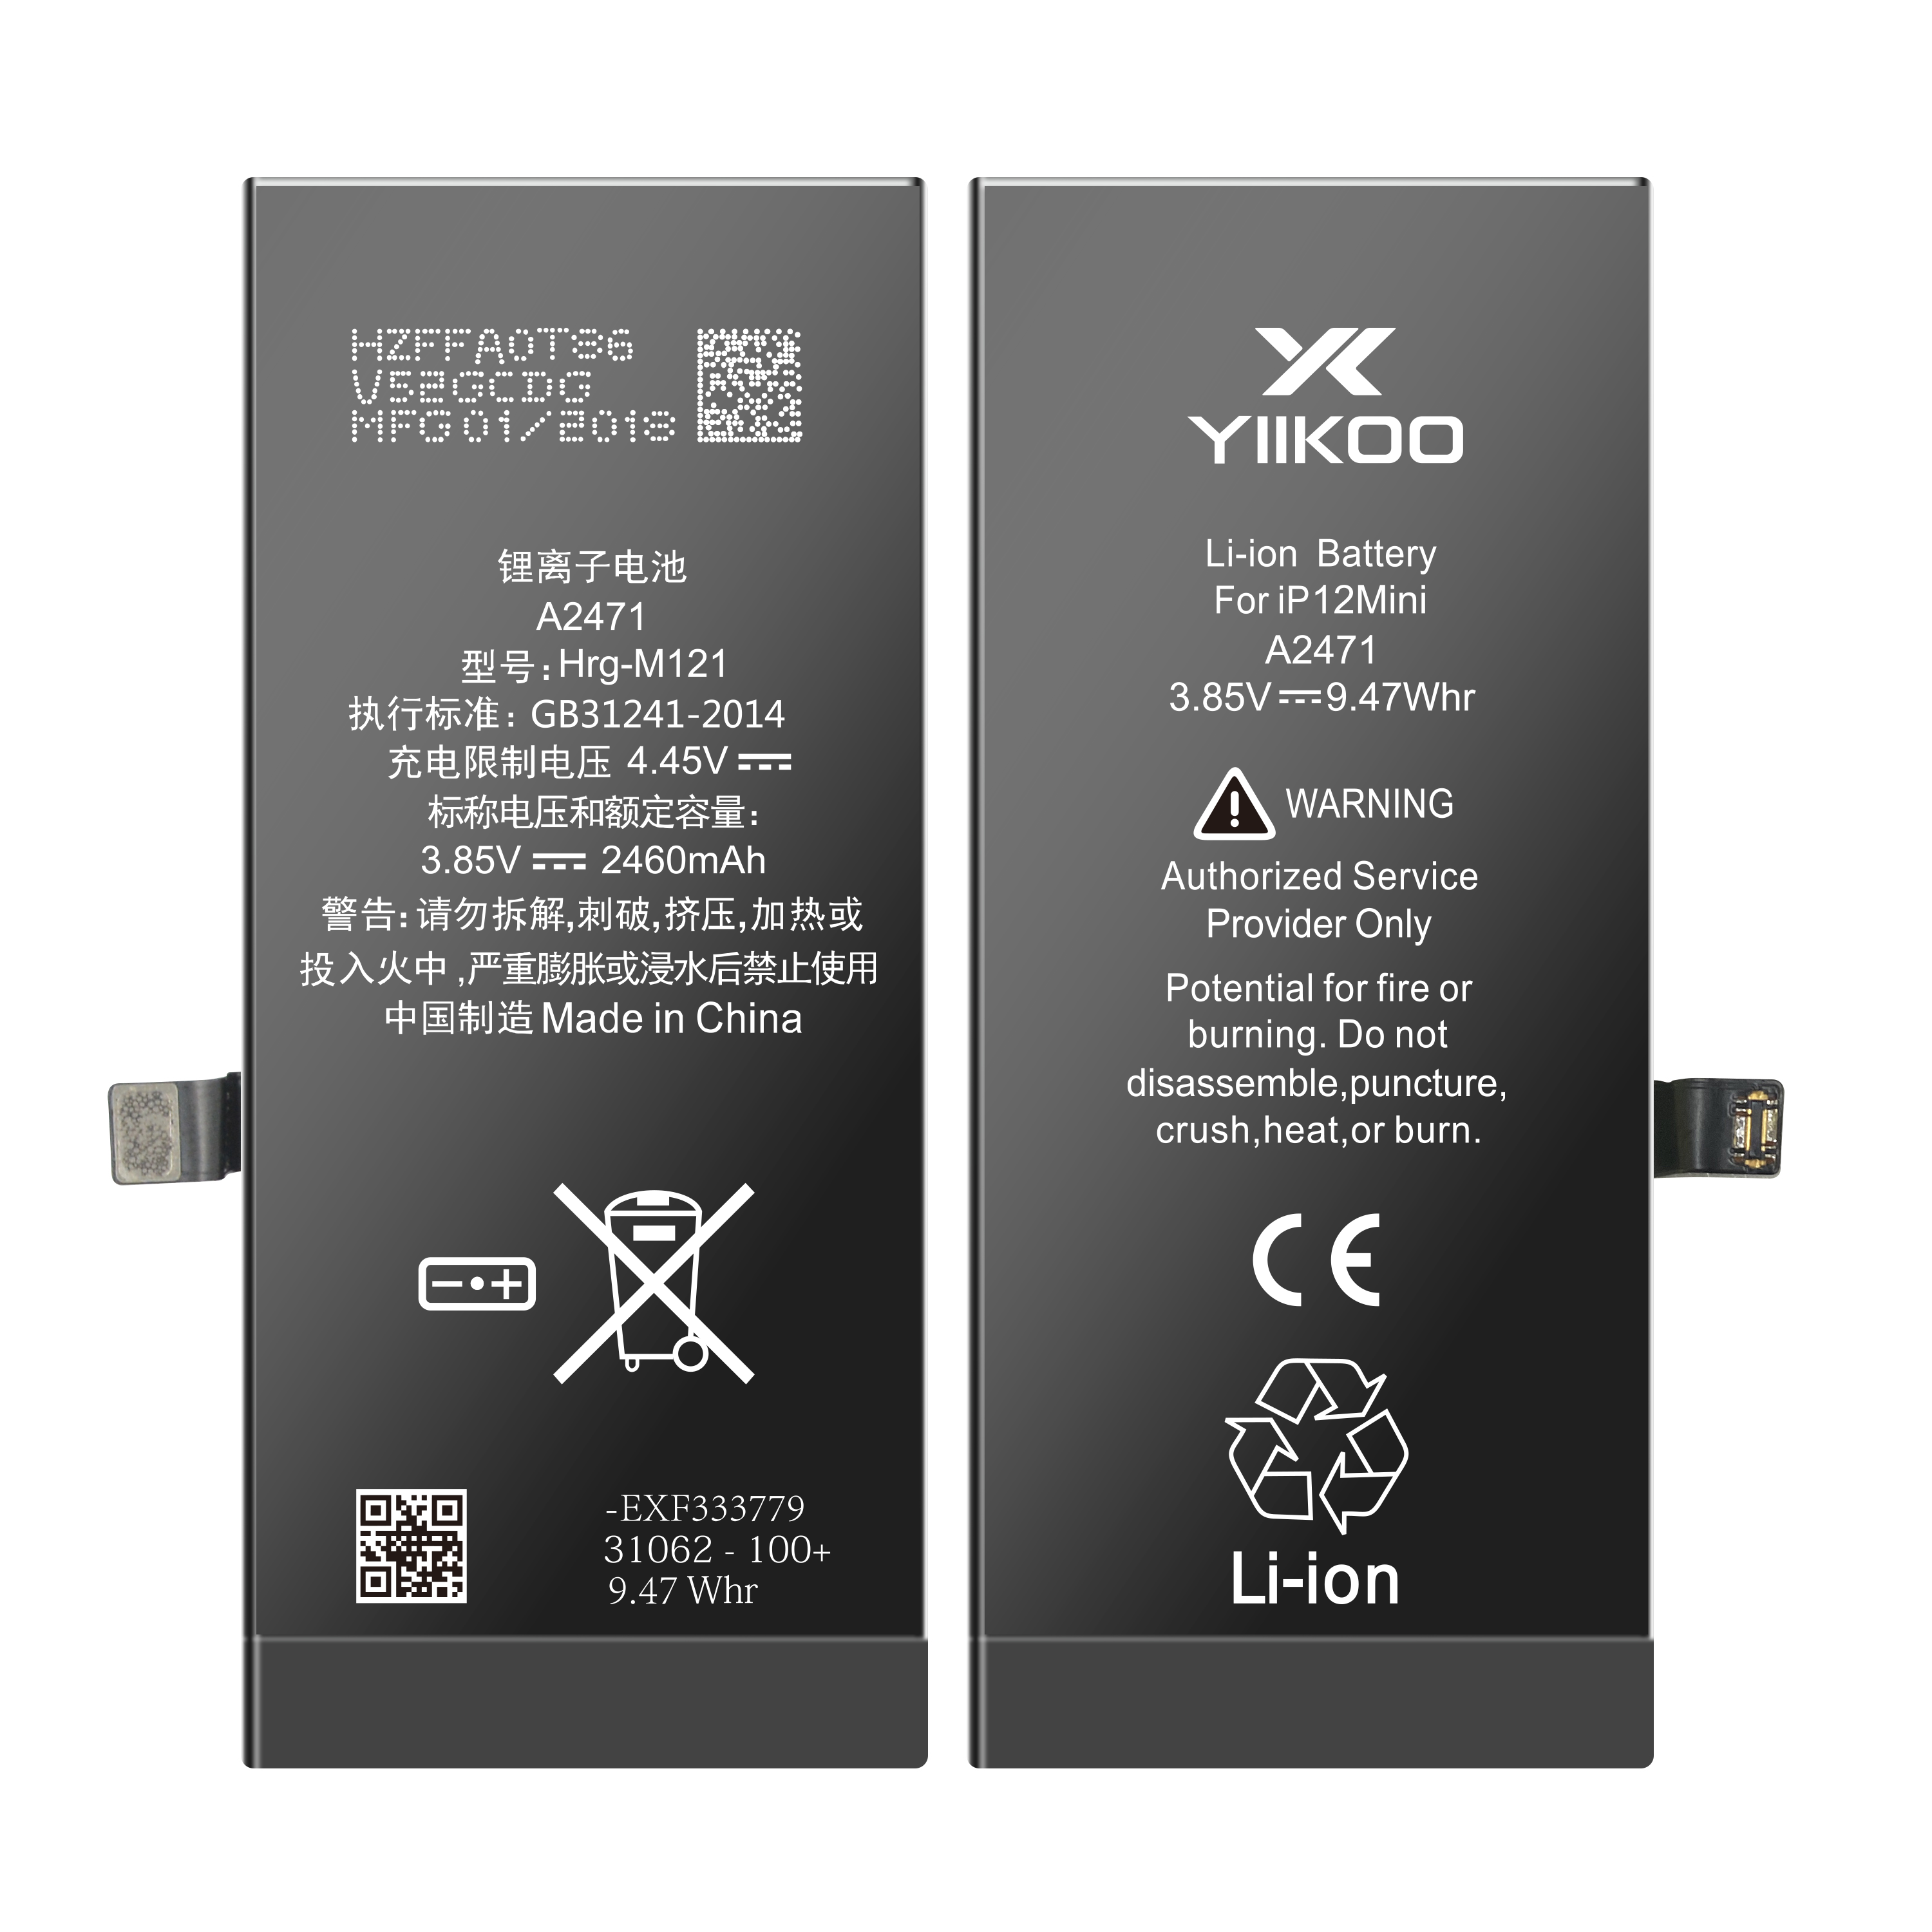 yiikoo Brand 2460mah Original High Capacity Iphone12 Mini Mobile Phone Battery Manufacturer